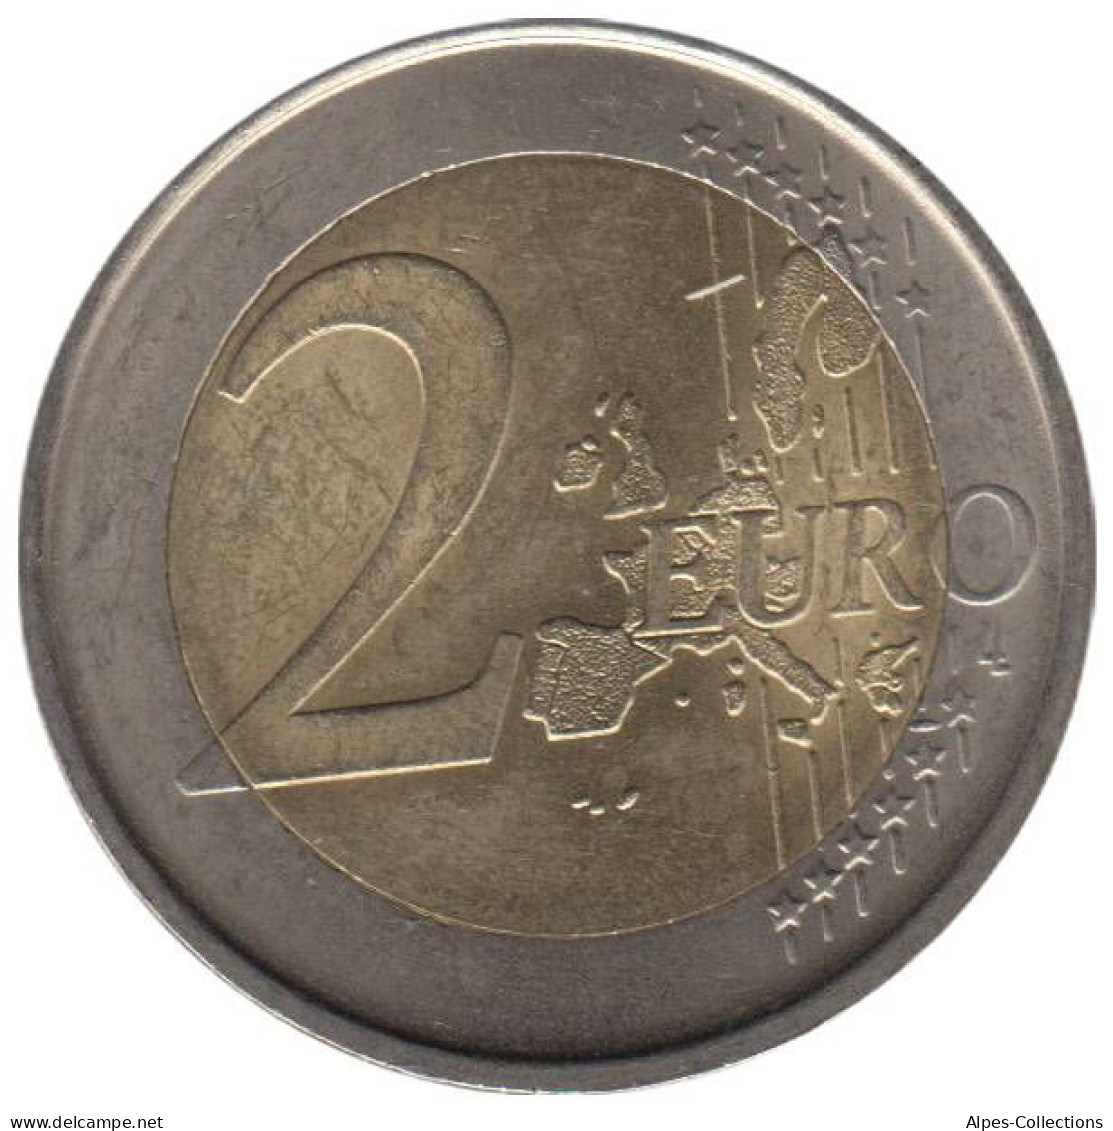 ES20006.1 - ESPAGNE - 2 Euros - 2006 - Spanien